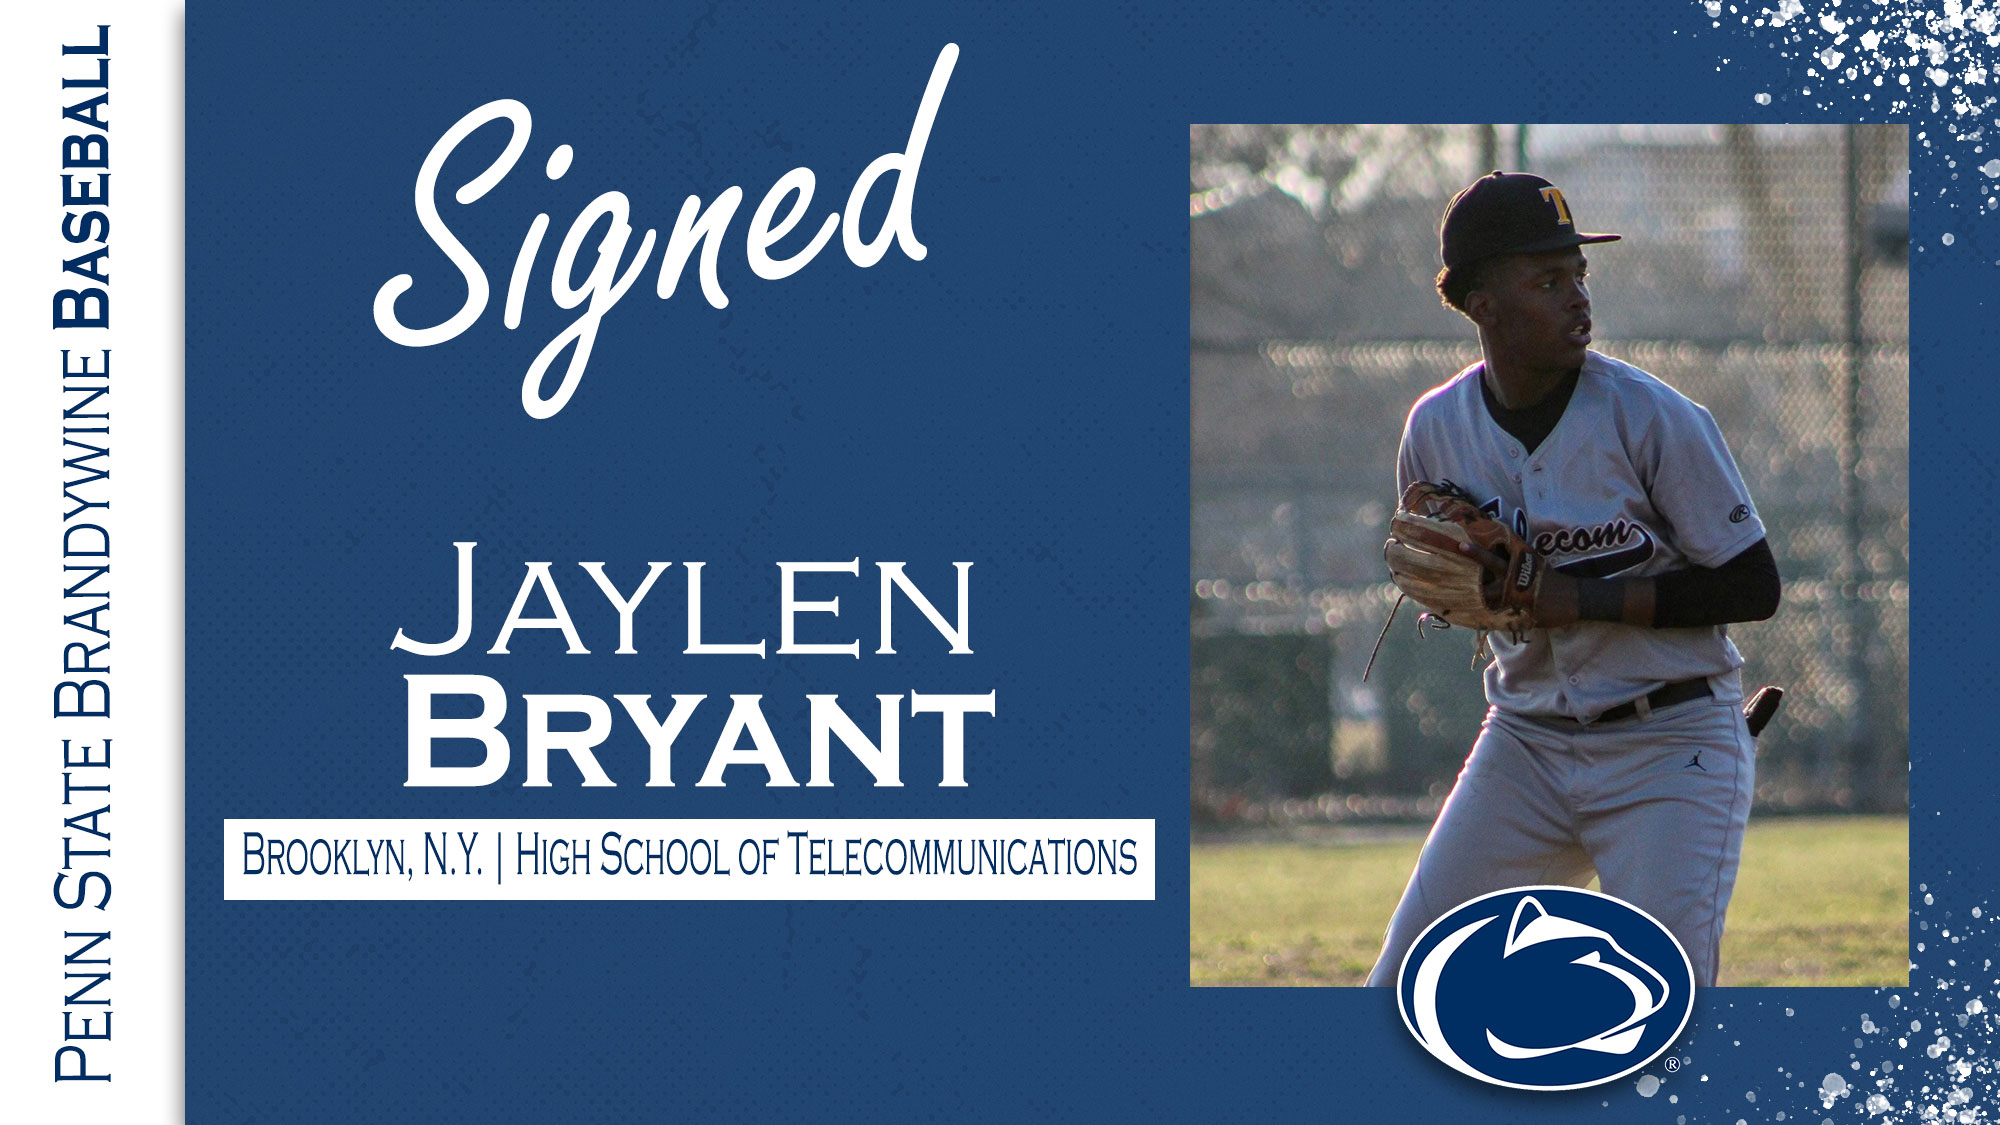 Jaylen Bryant